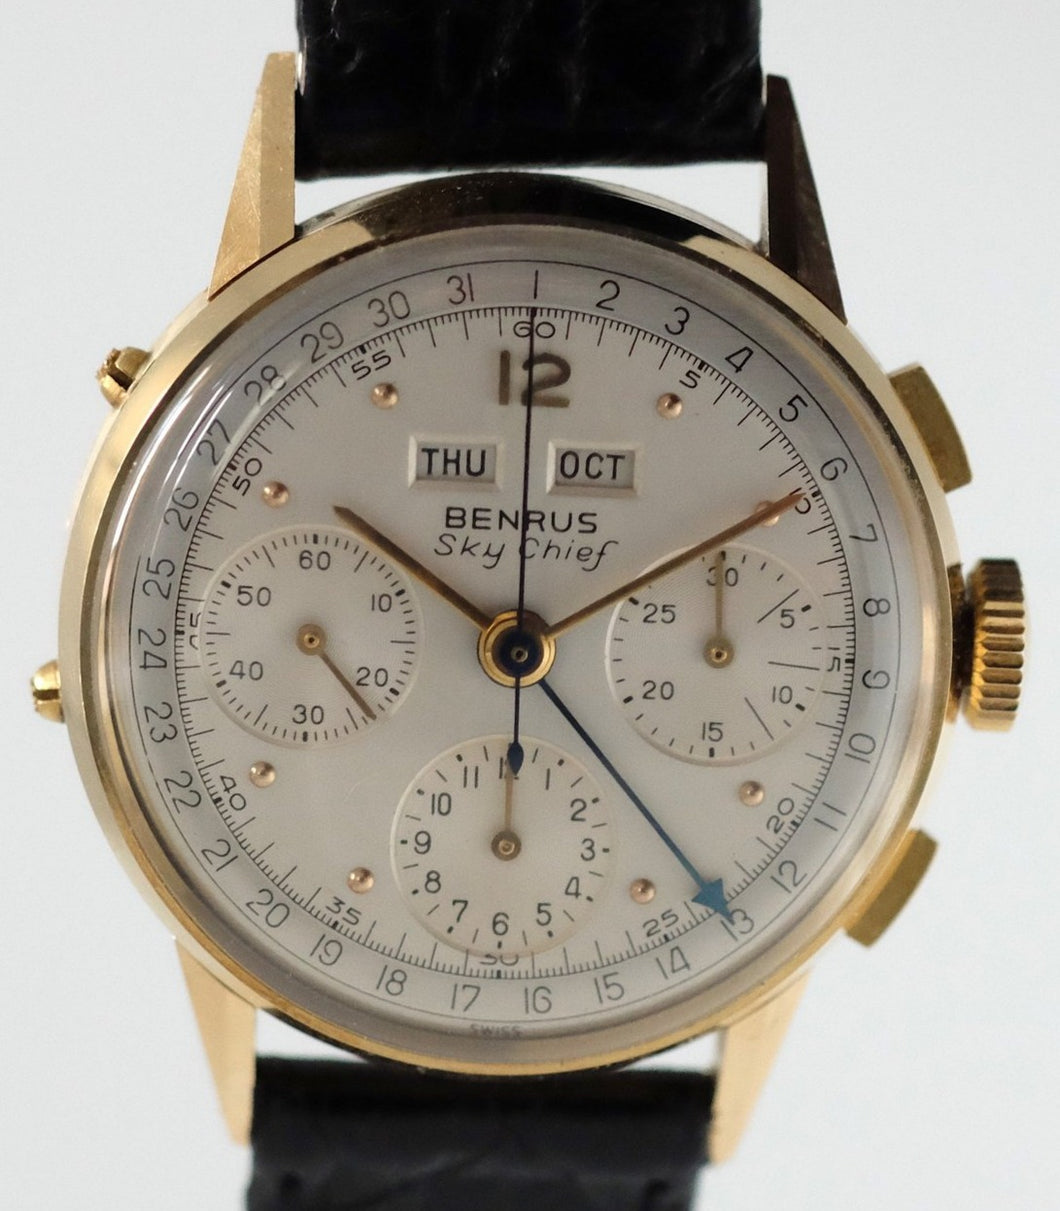 Benrus Sky Chief 14k Gold Triple Date Chronograph